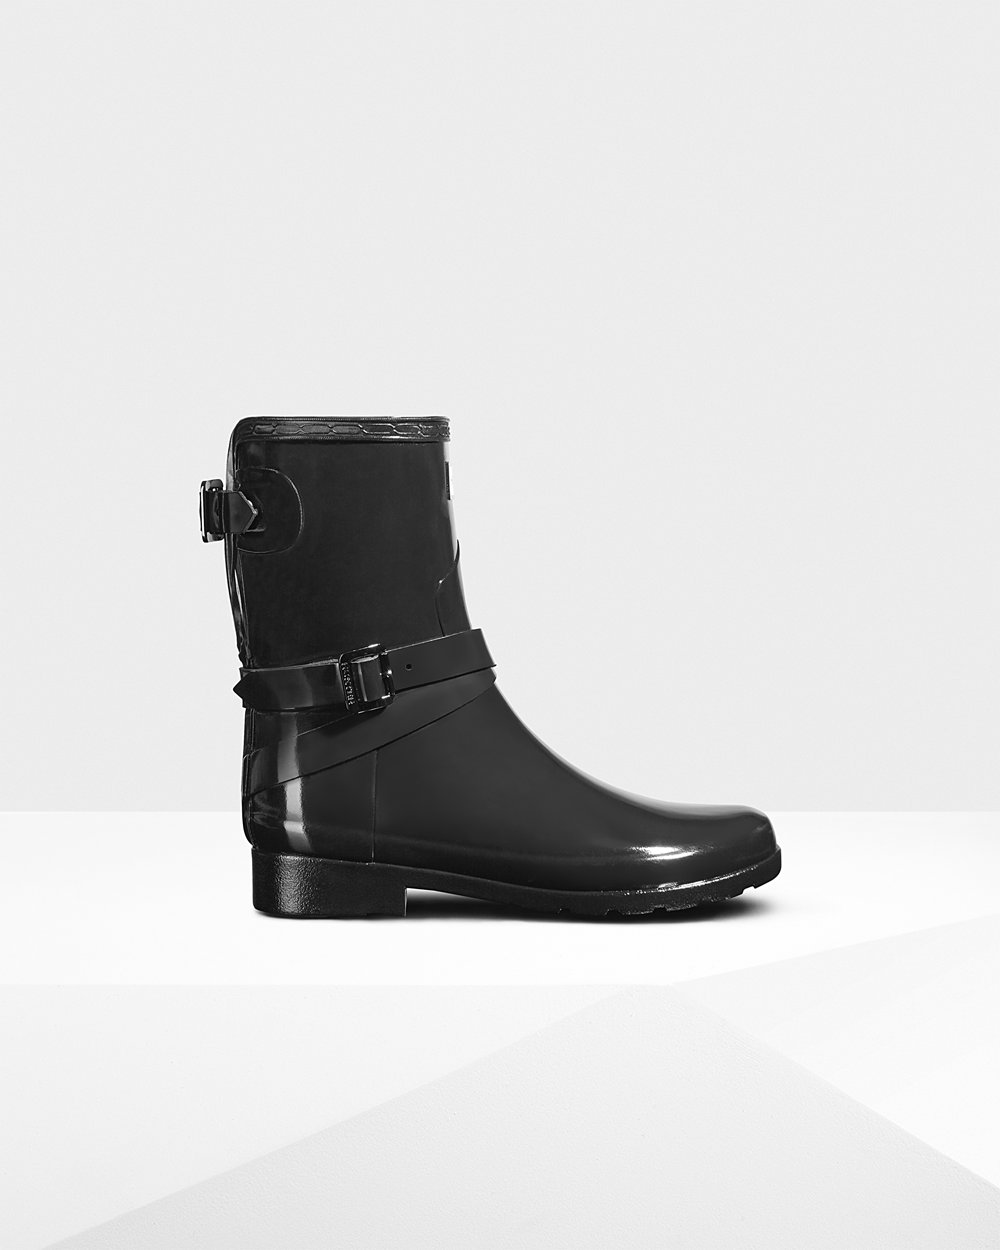 Womens Short Rain Boots - Hunter Refined Adjustable Gloss (74DXWOZMK) - Black